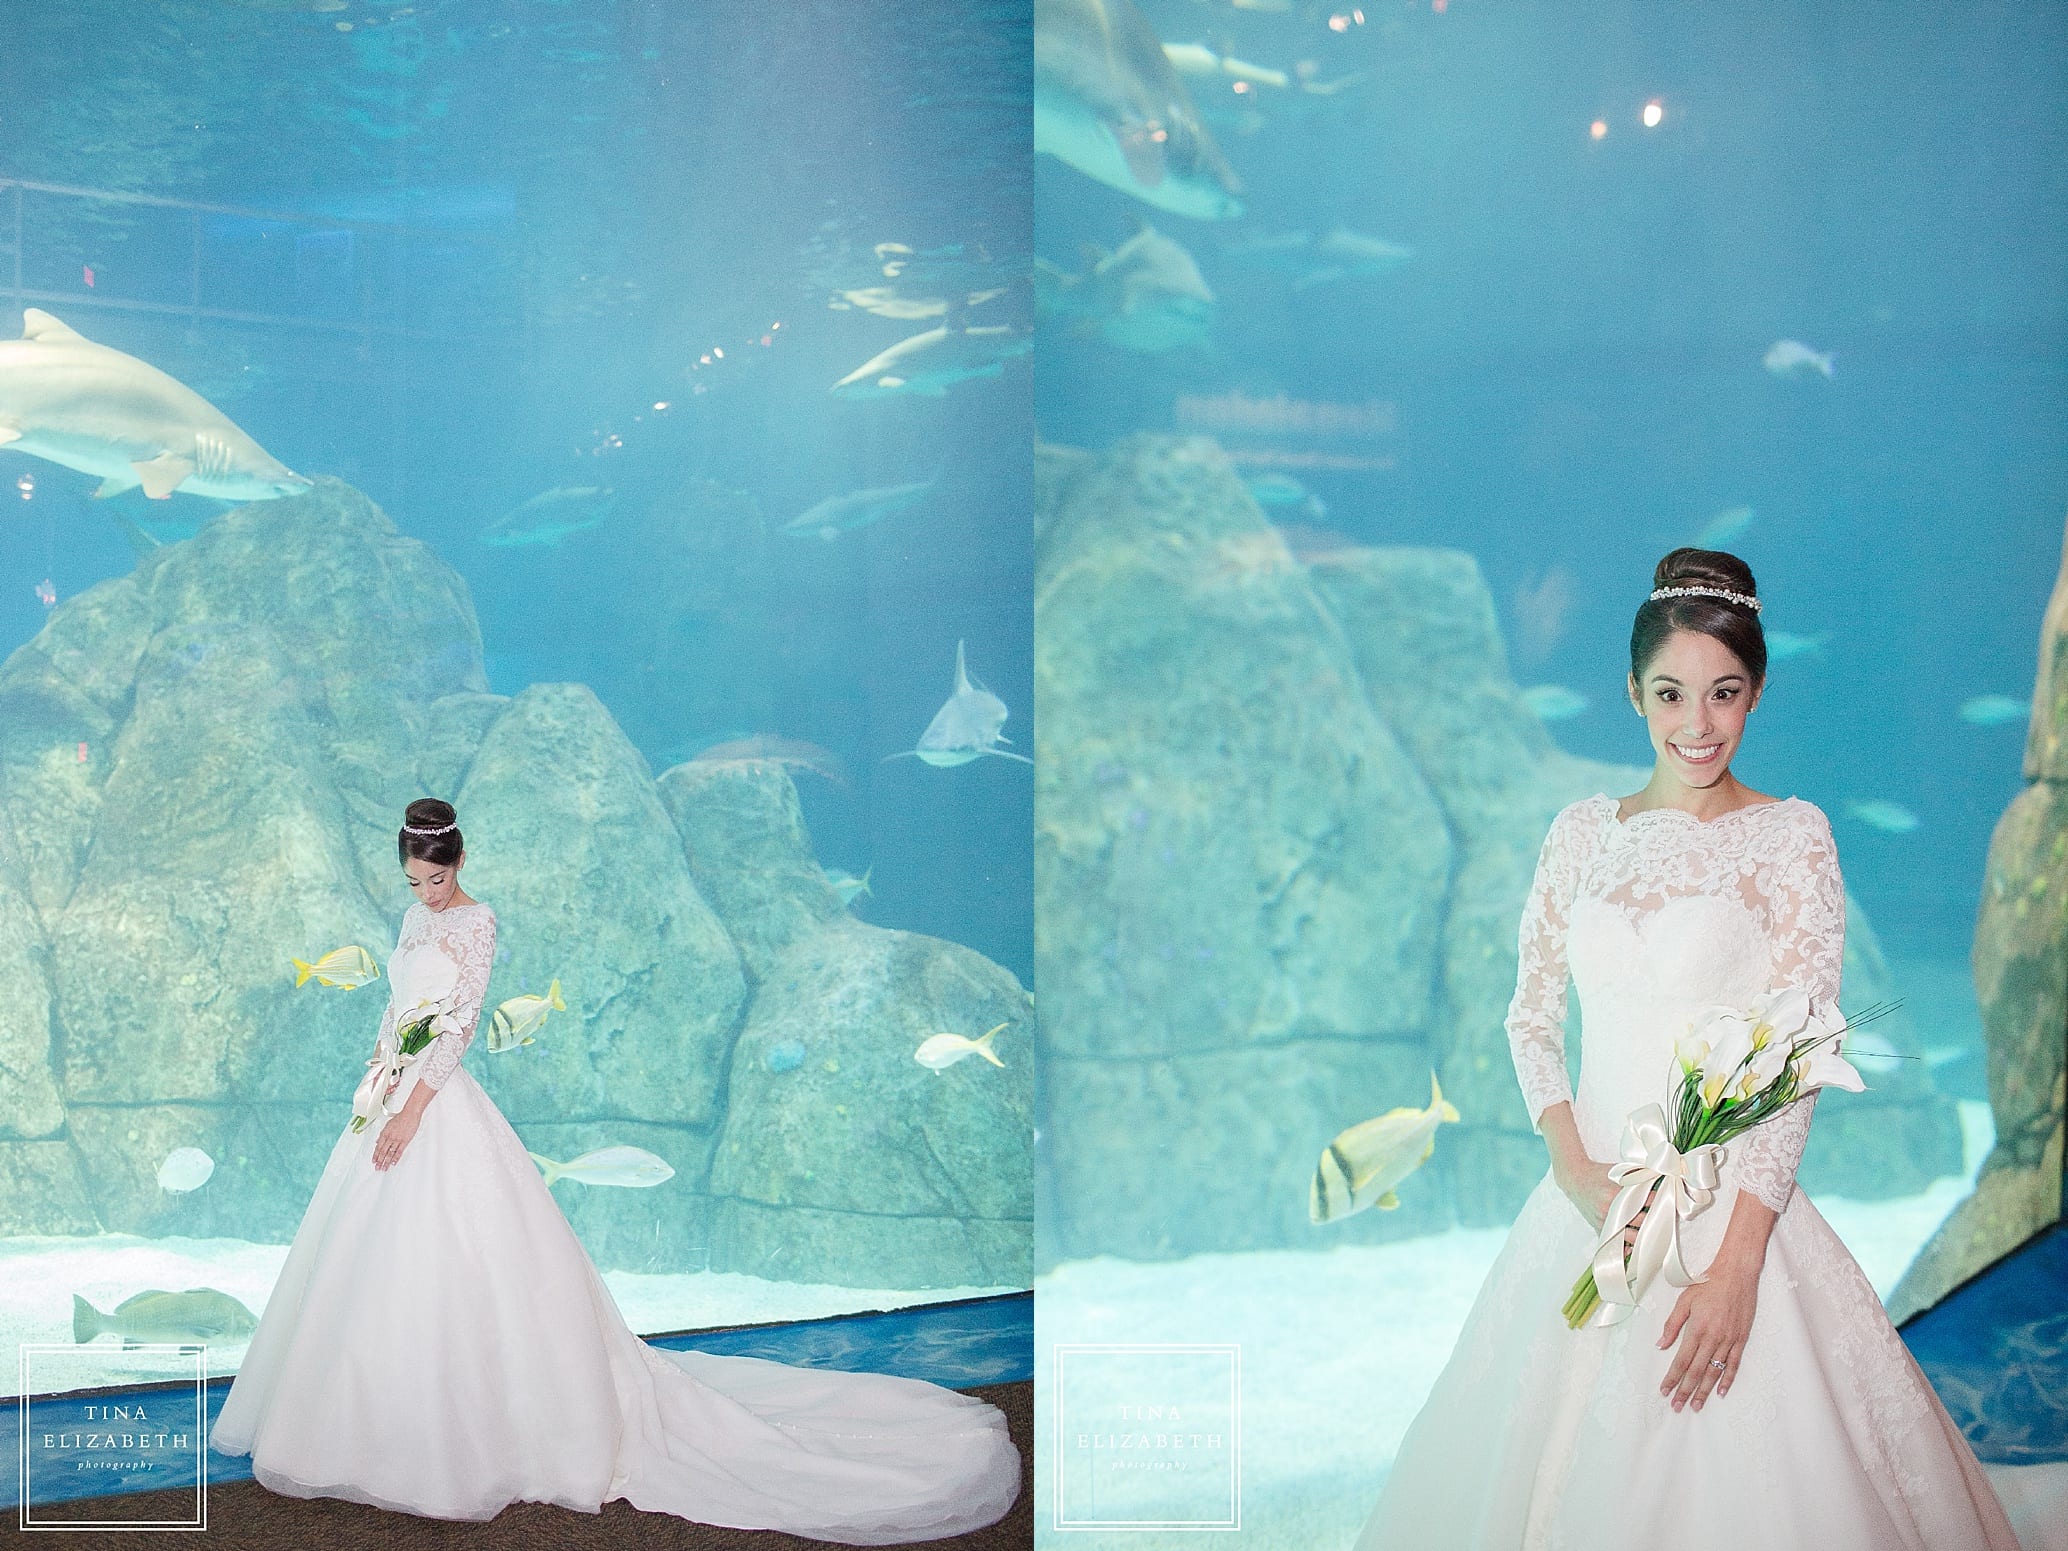 adventure-aquarium-wedding-photos-tina-elizabeth-photography_1059